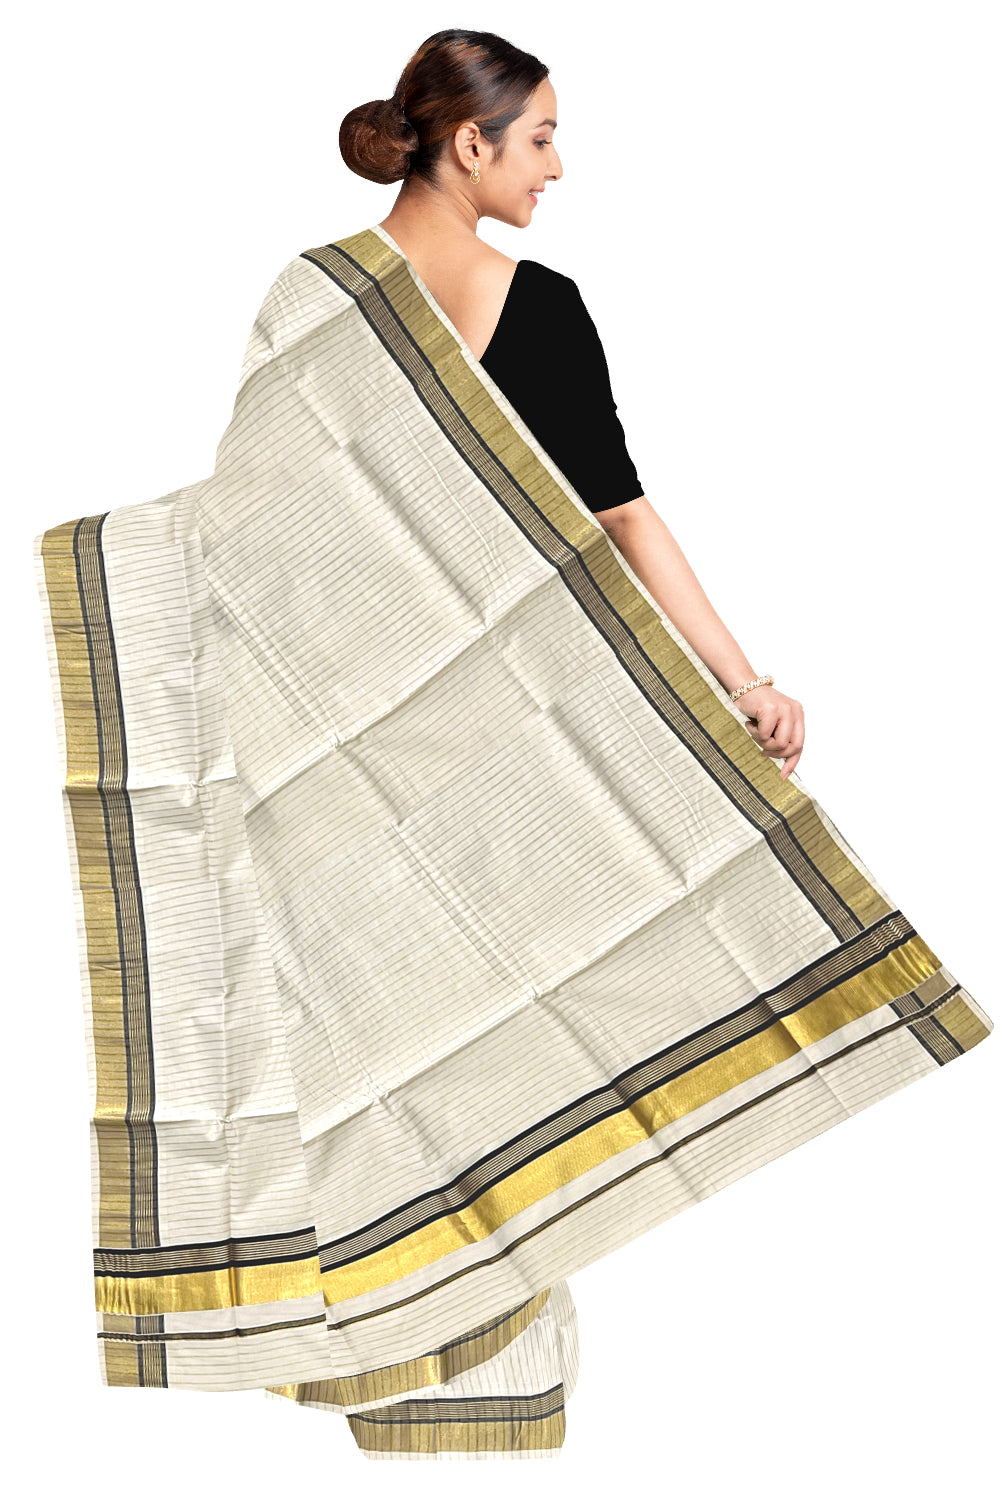 Pure Cotton Kerala Kasavu Lines Design Saree with Black Border